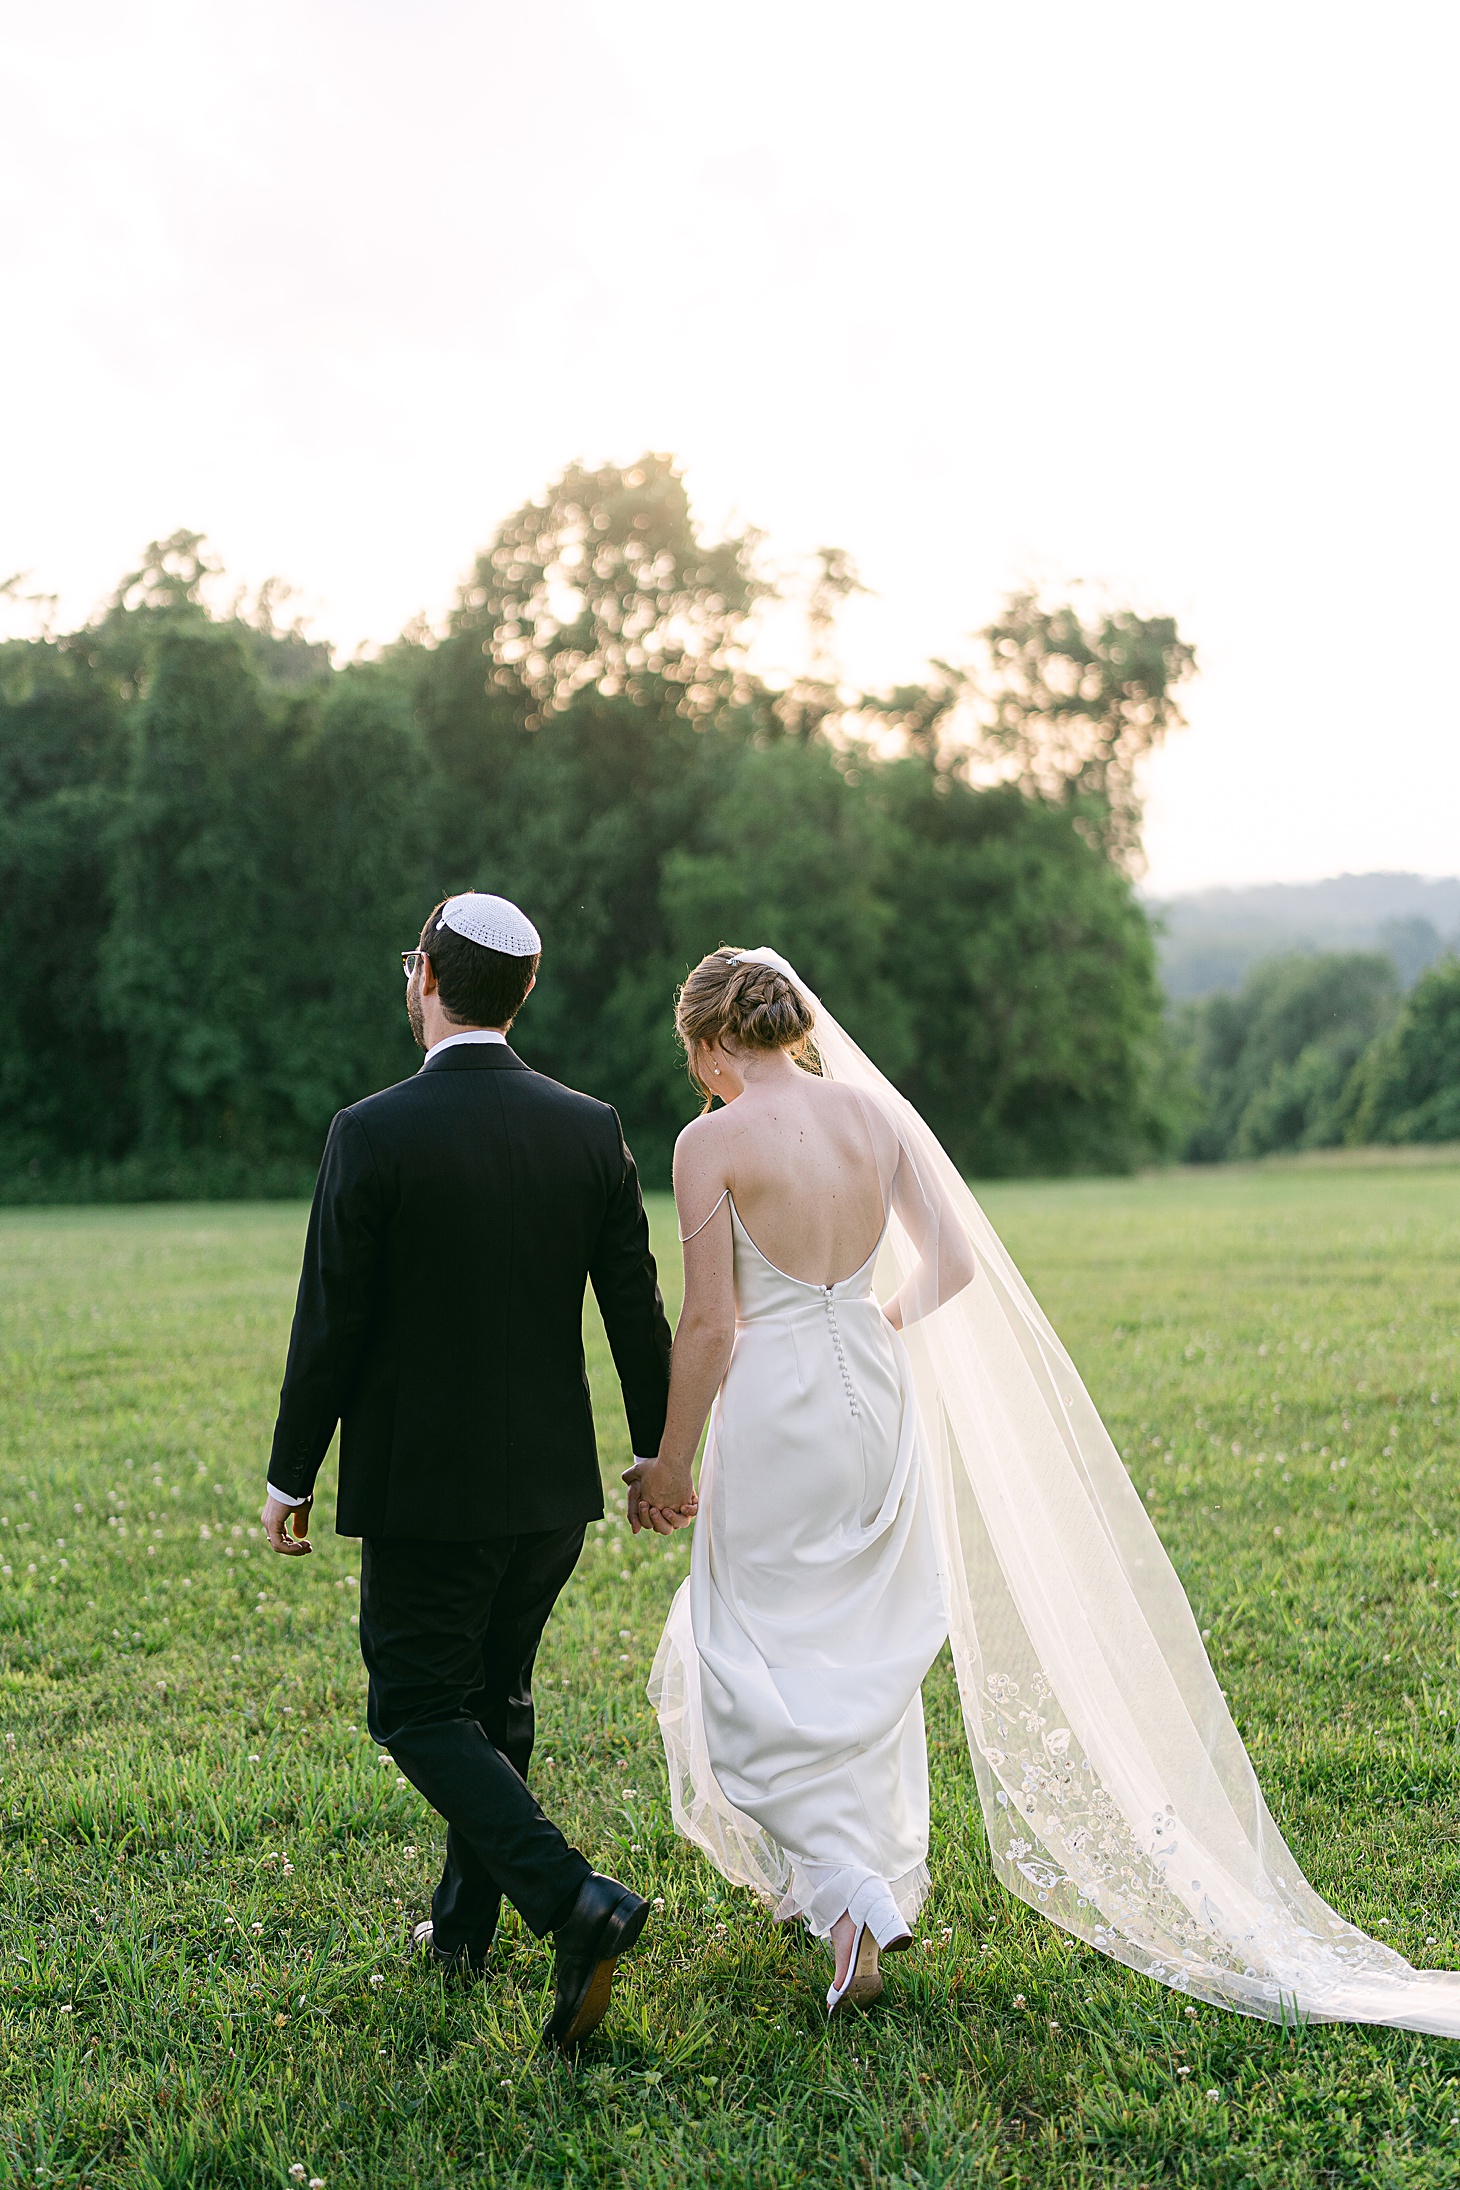 Golden hour bride & groom  | Modern Music-Inspired Jewish Wedding at Private Estate by Sarah Bradshaw